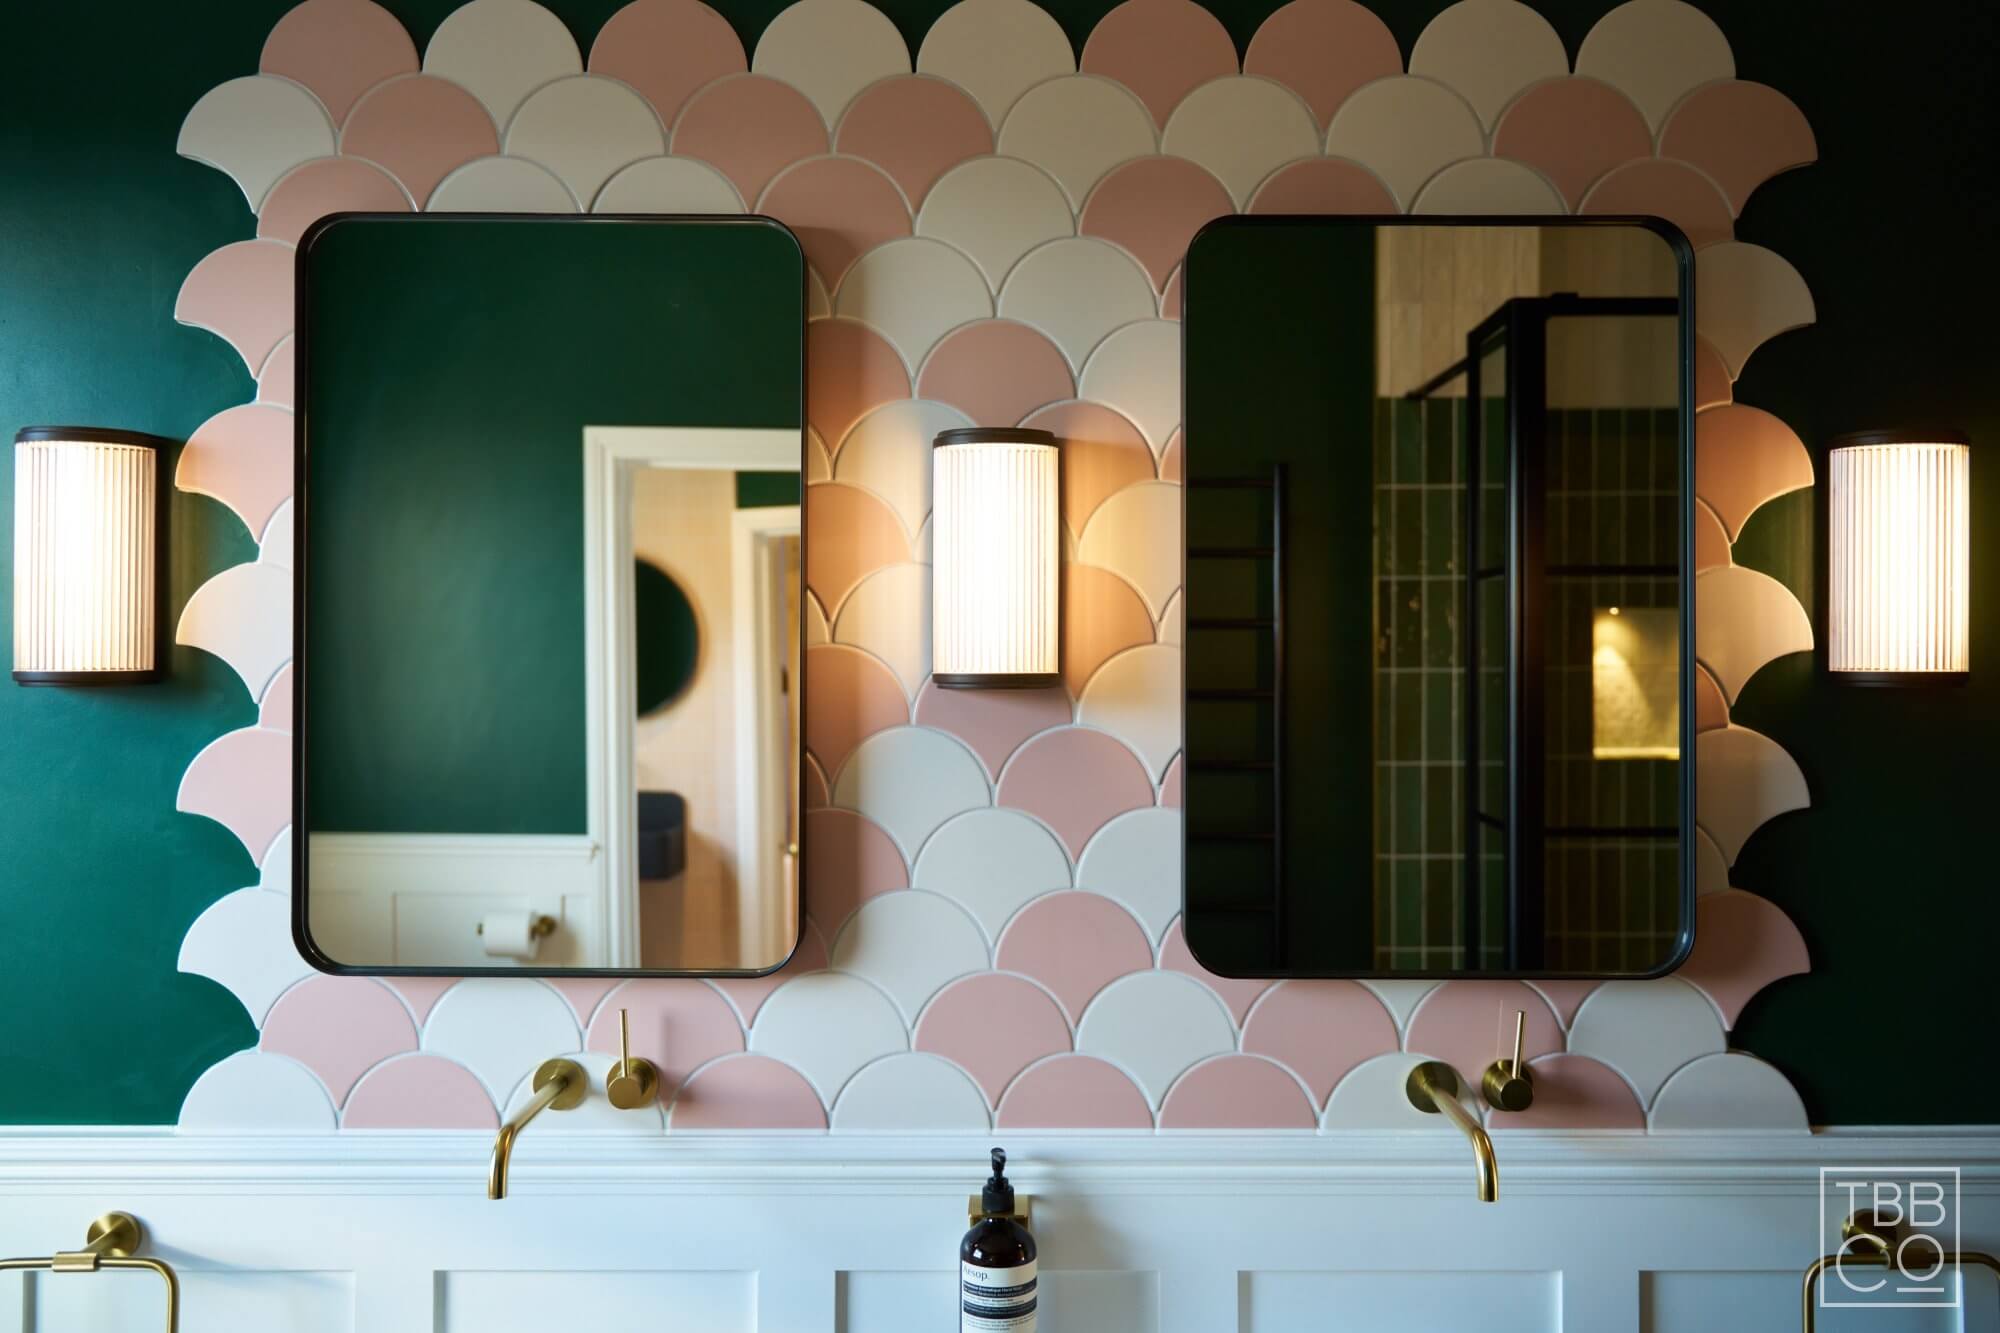 Fishscale Bathroom Tiles Black Bathroom Mirrors Black Wall Lights